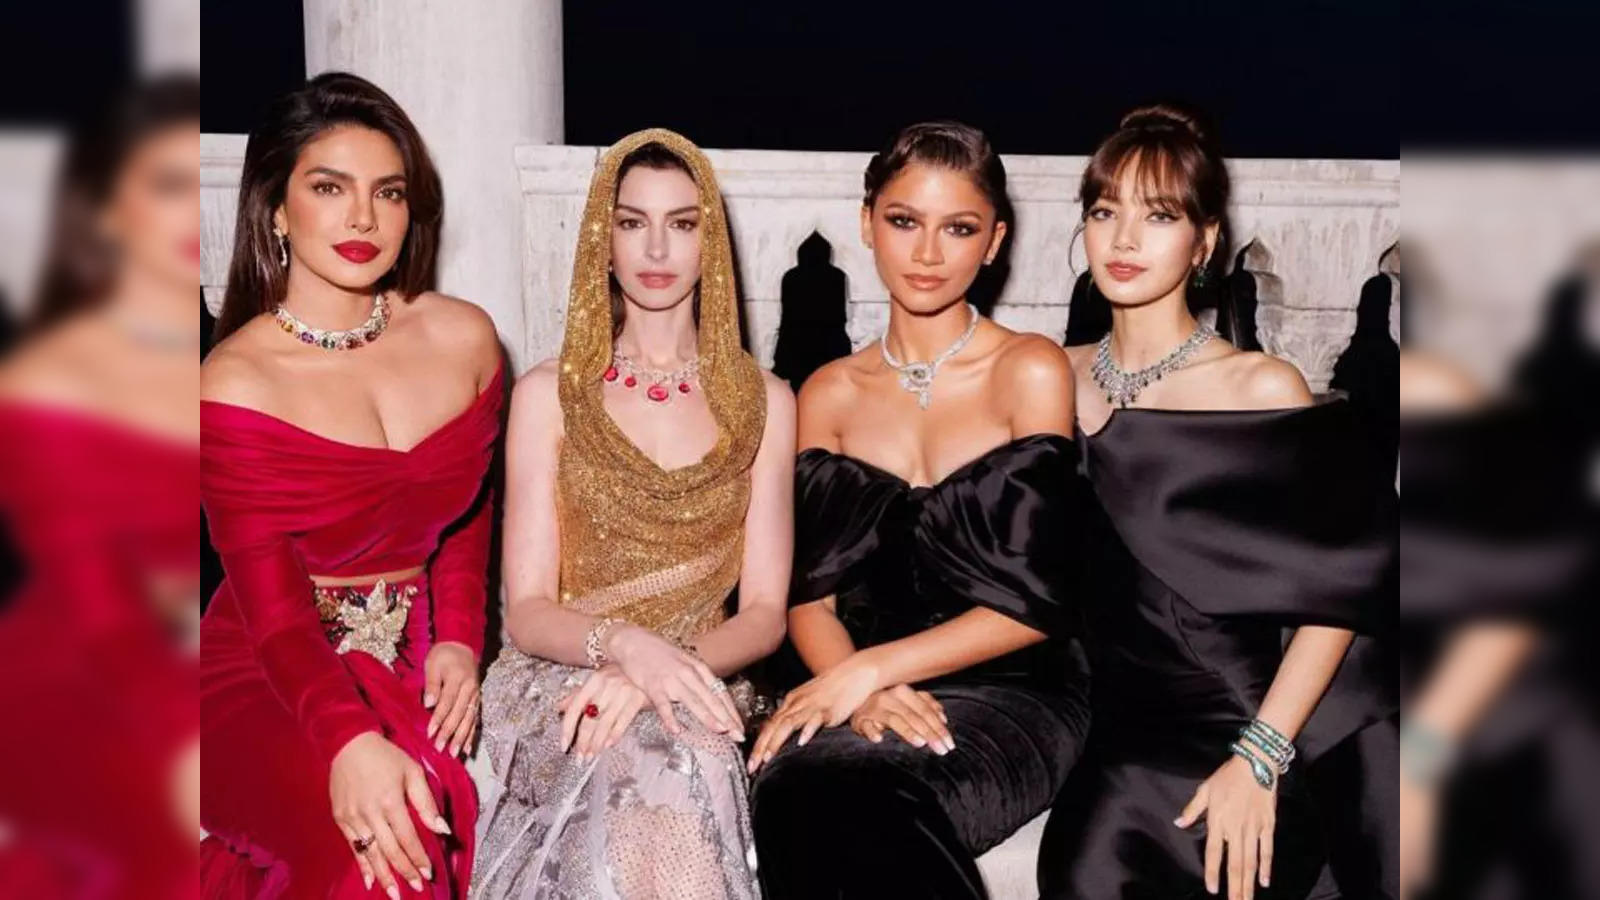 Priyanka Chopra: Girls' night out: Priyanka Chopra hangs out with  Blackpink's Lisa, Zendaya & Anne Hathaway at Bulgari event in Venice - The  Economic Times